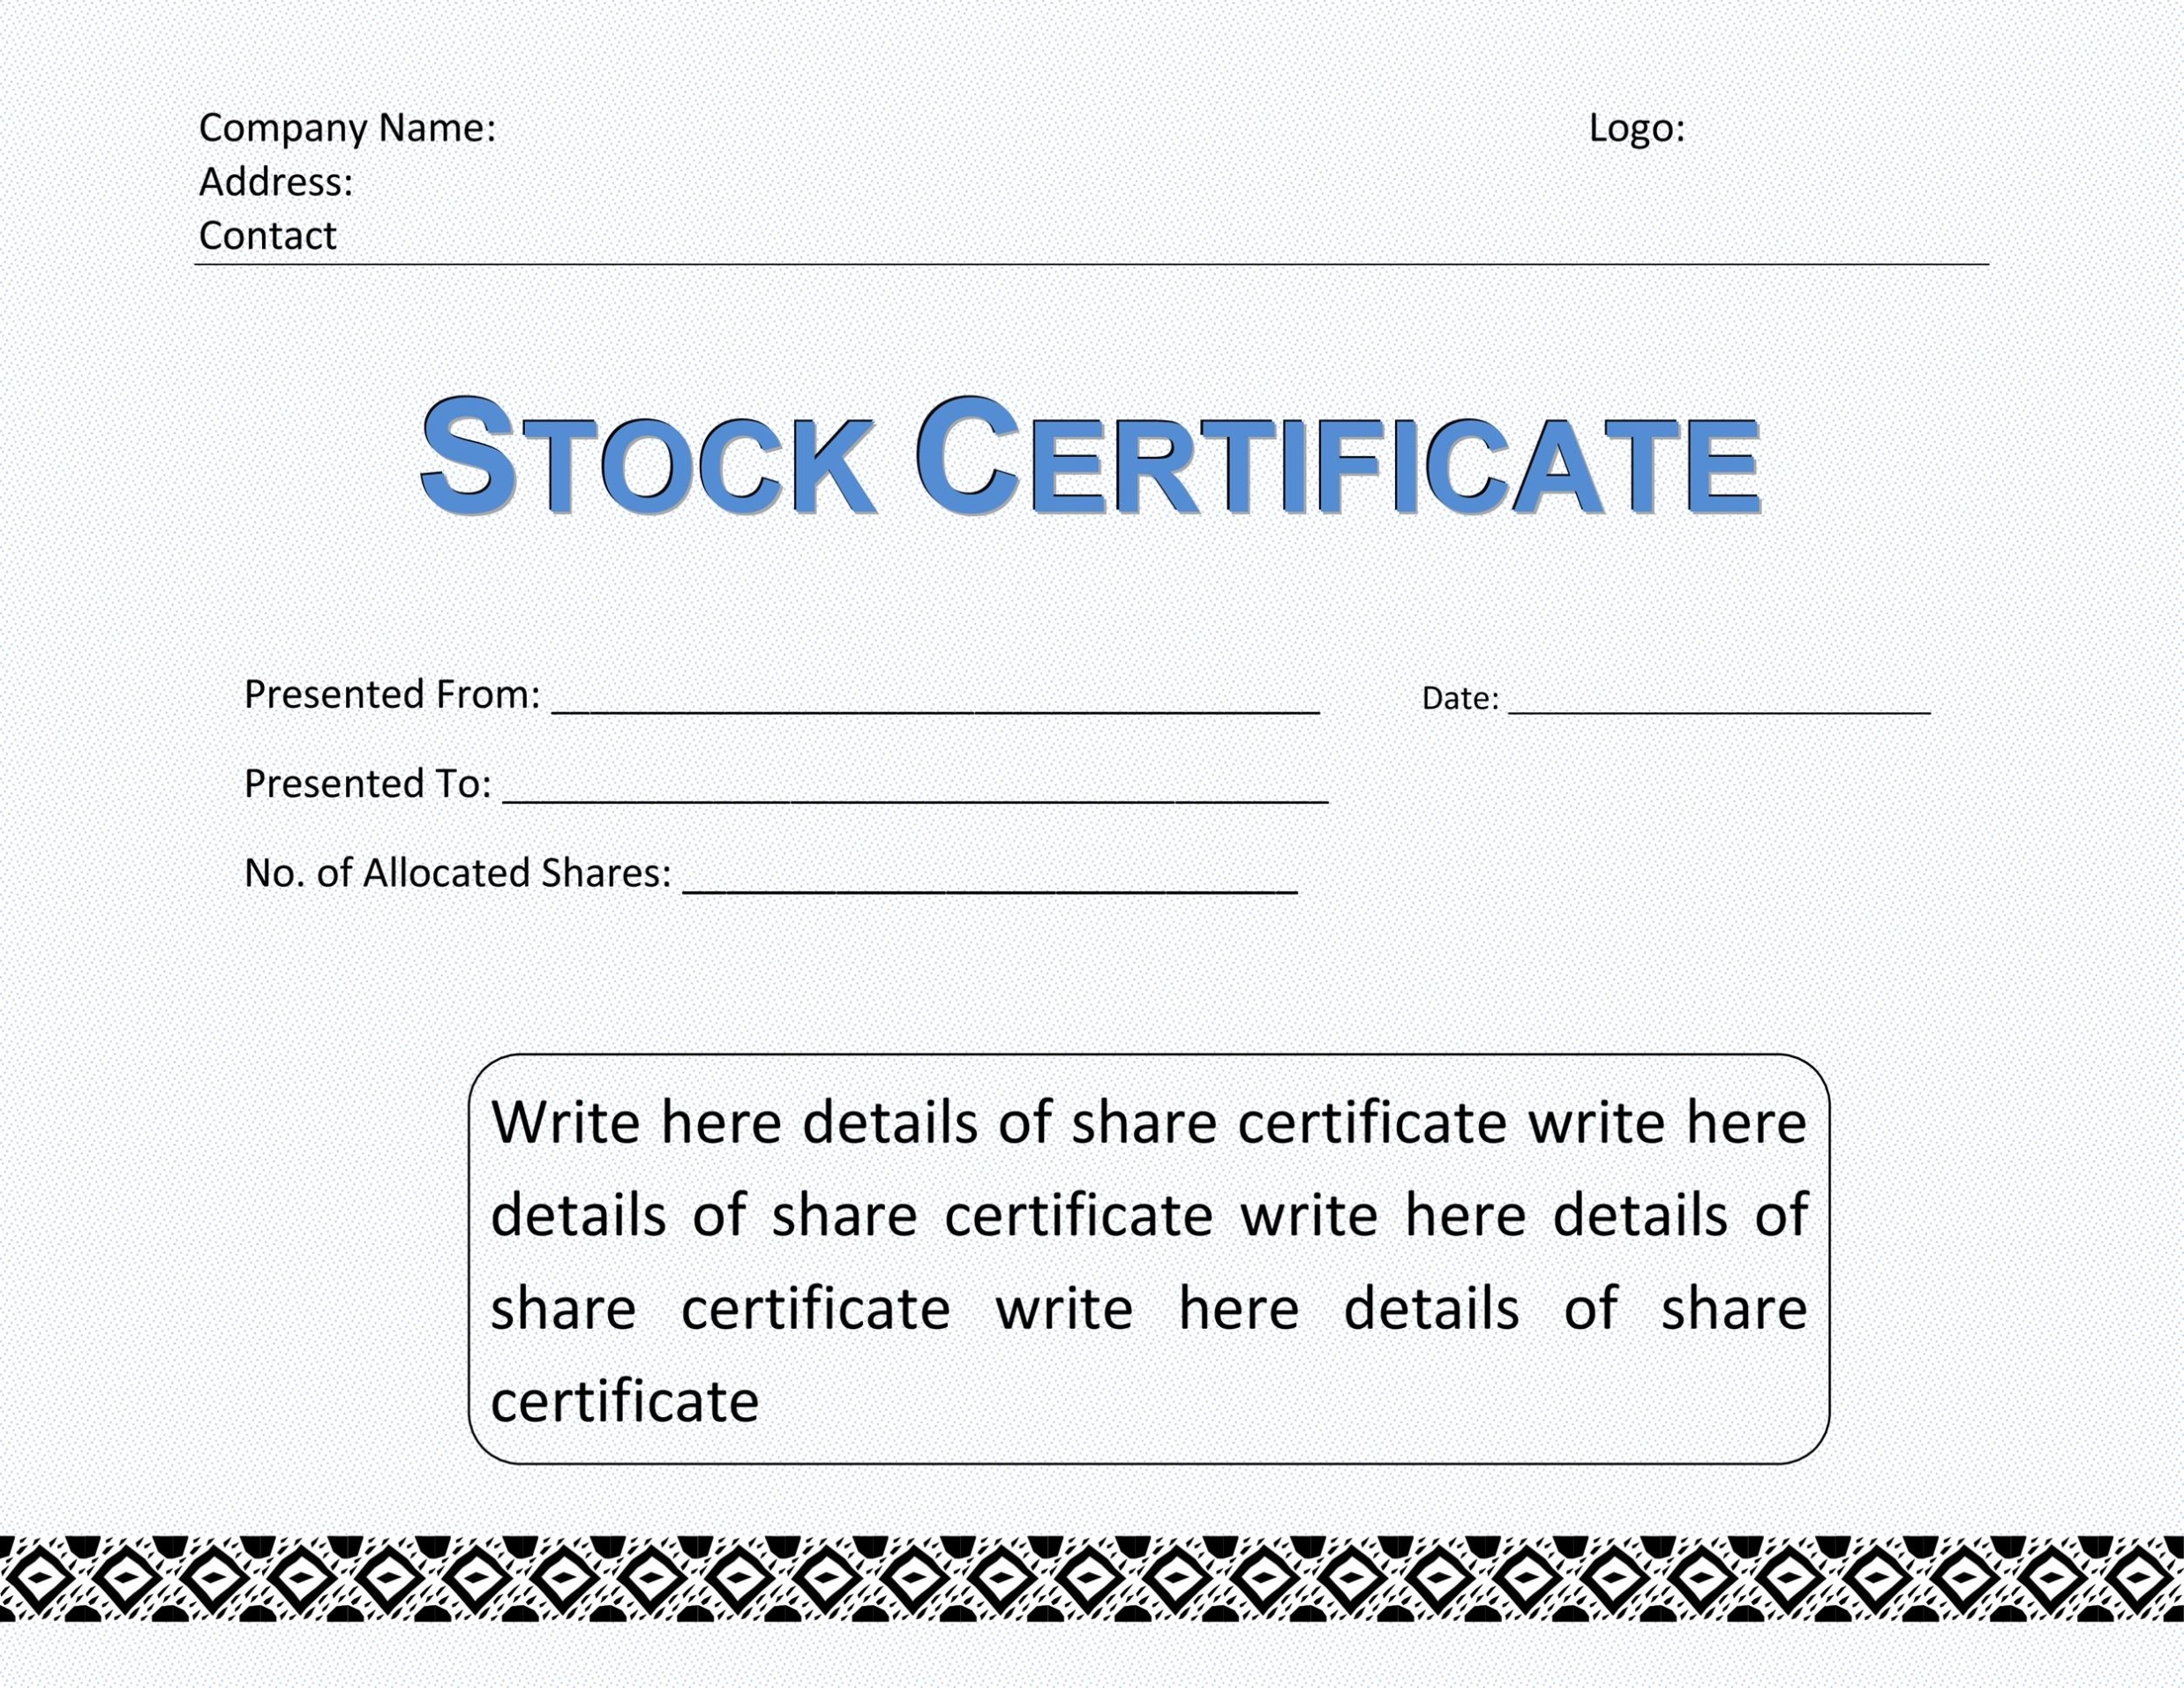 40+ Free Stock Certificate Templates (Word, Pdf) - Template Lab In Template Of Share Certificate